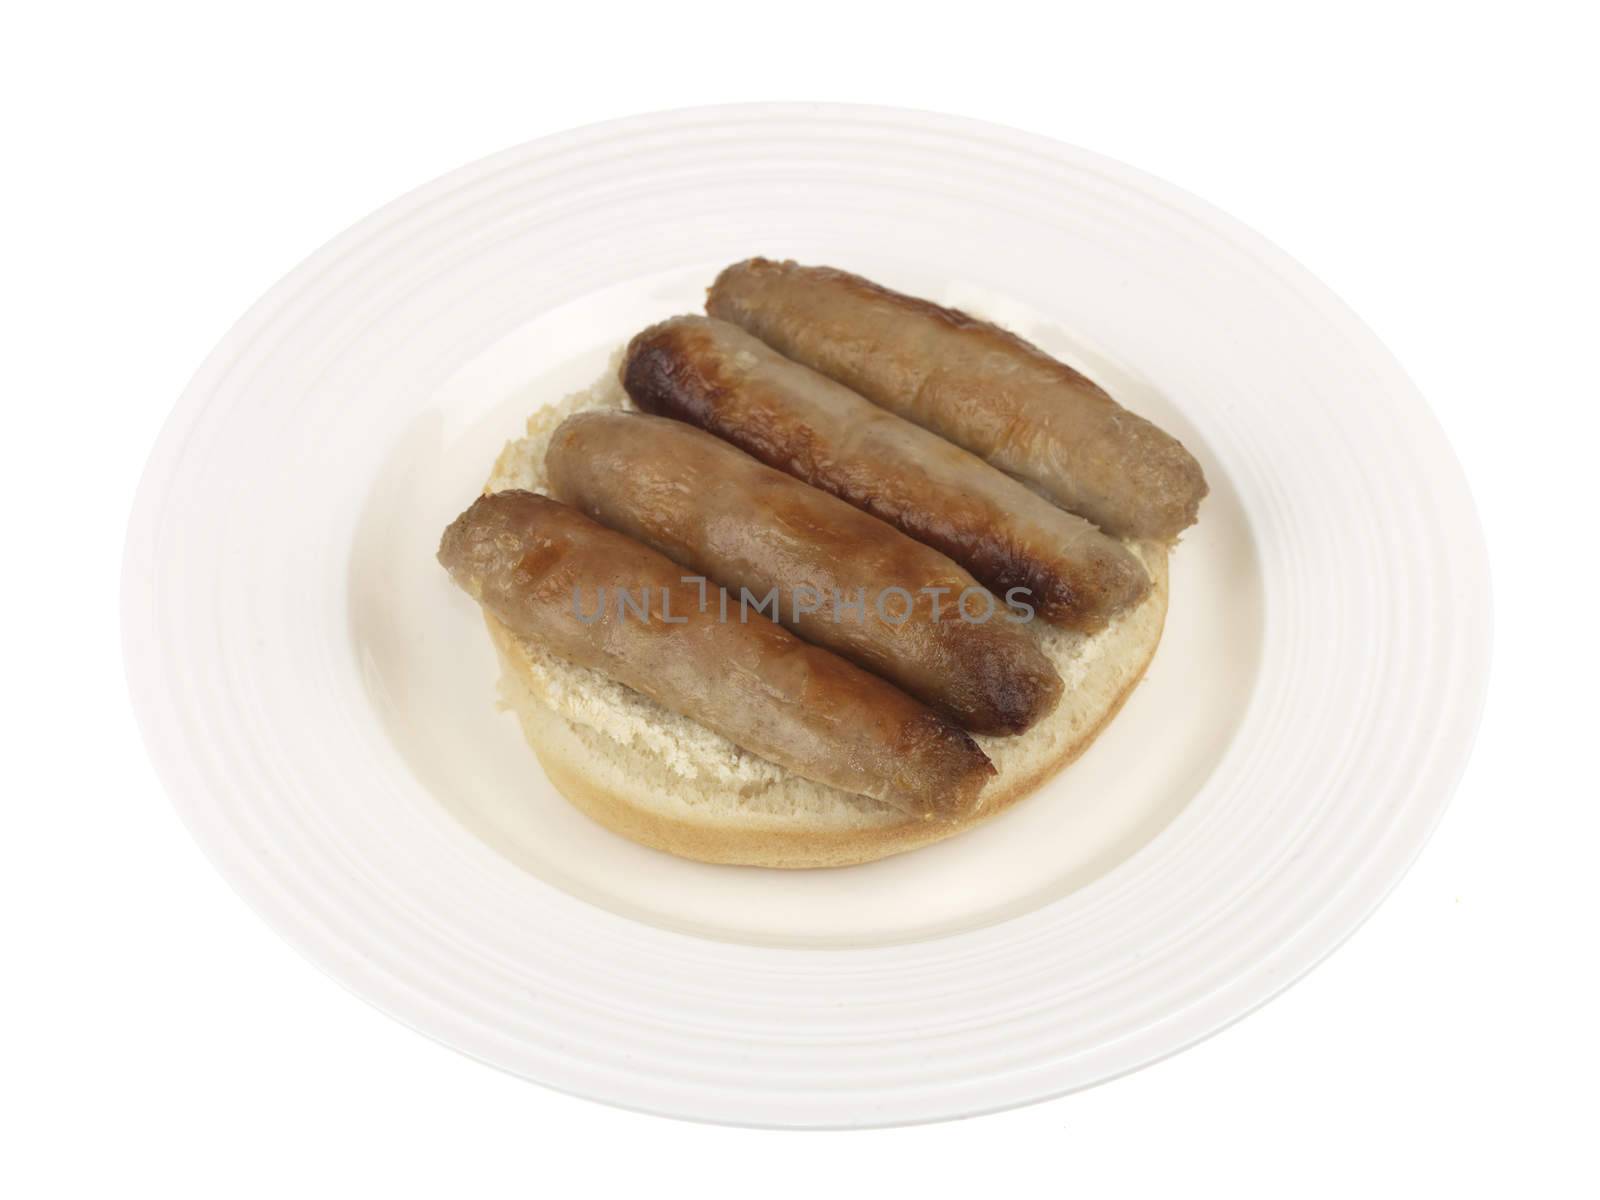 Sausage Breakfast Roll by Whiteboxmedia